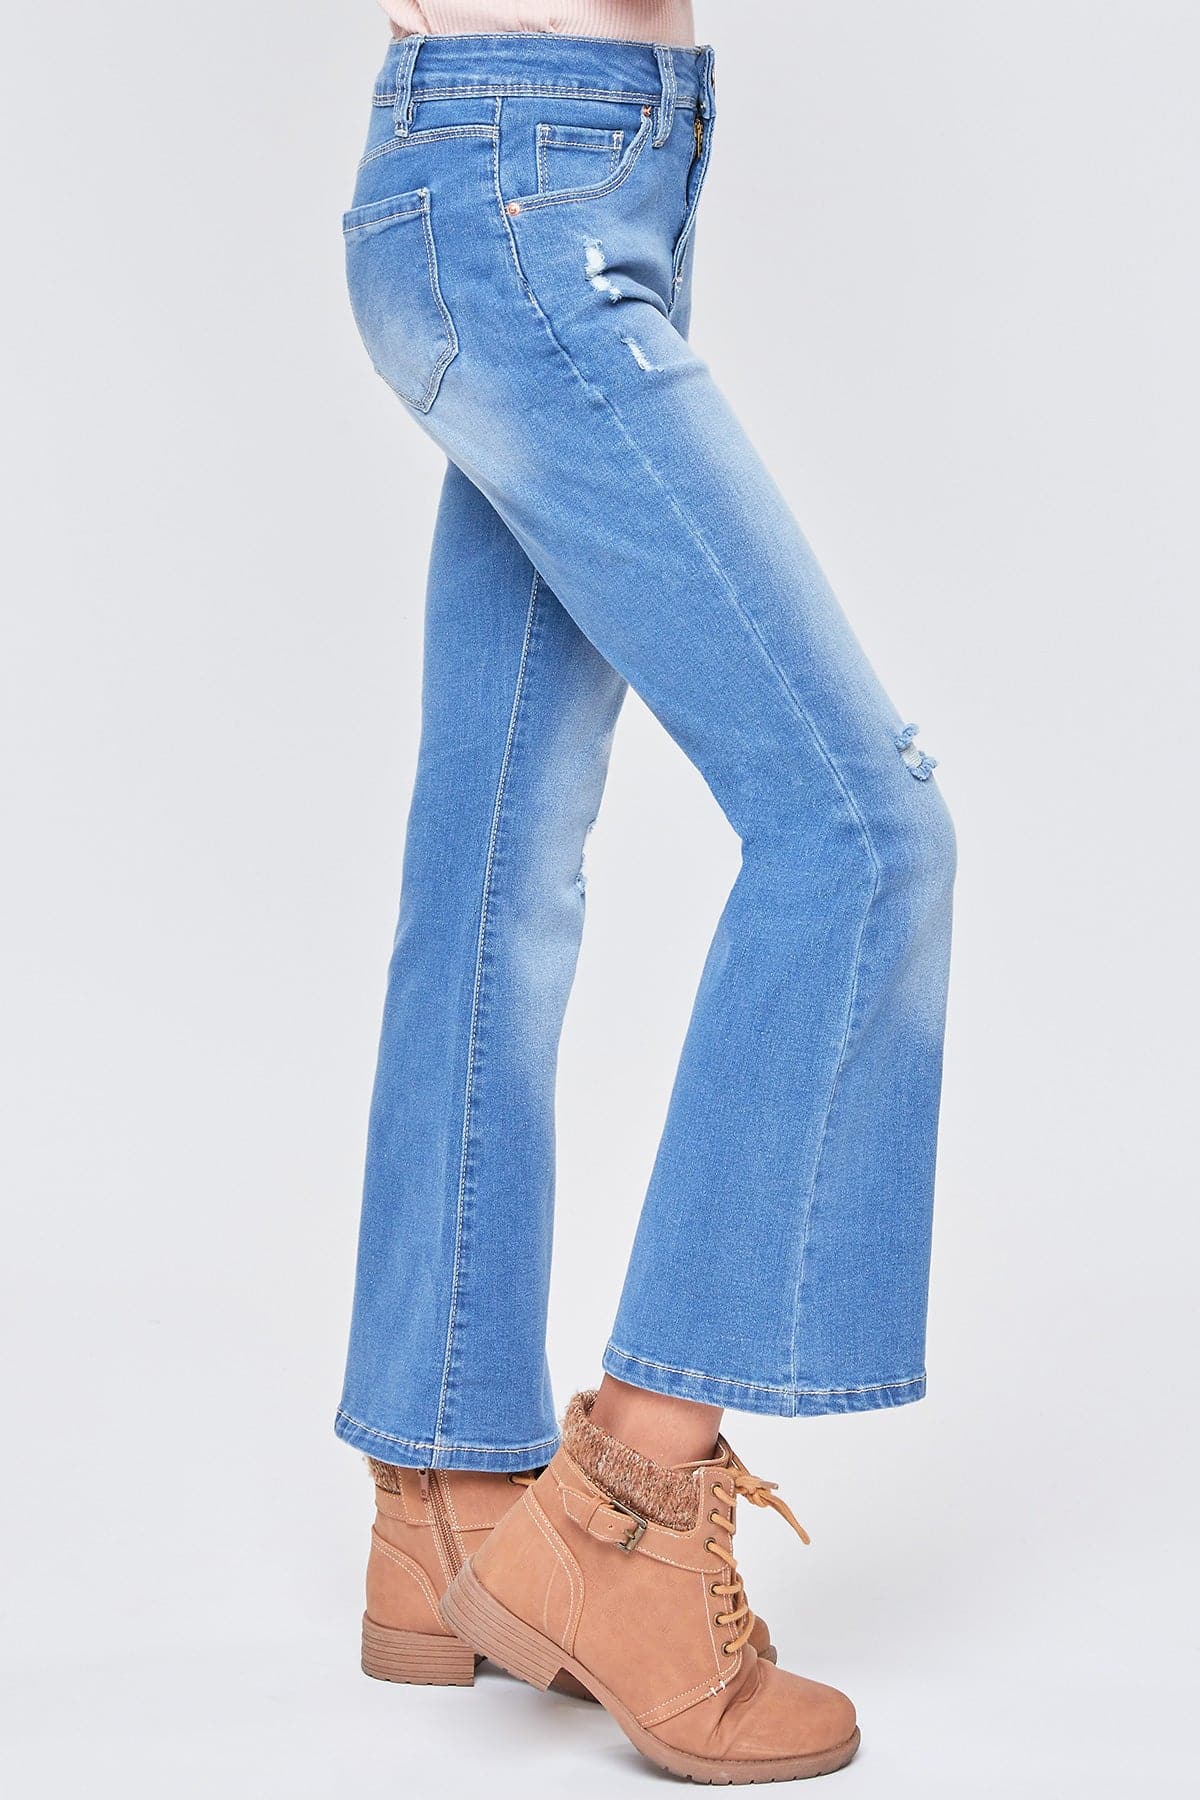 Girls Bell Bottom Essential  Clean Hem Jeans